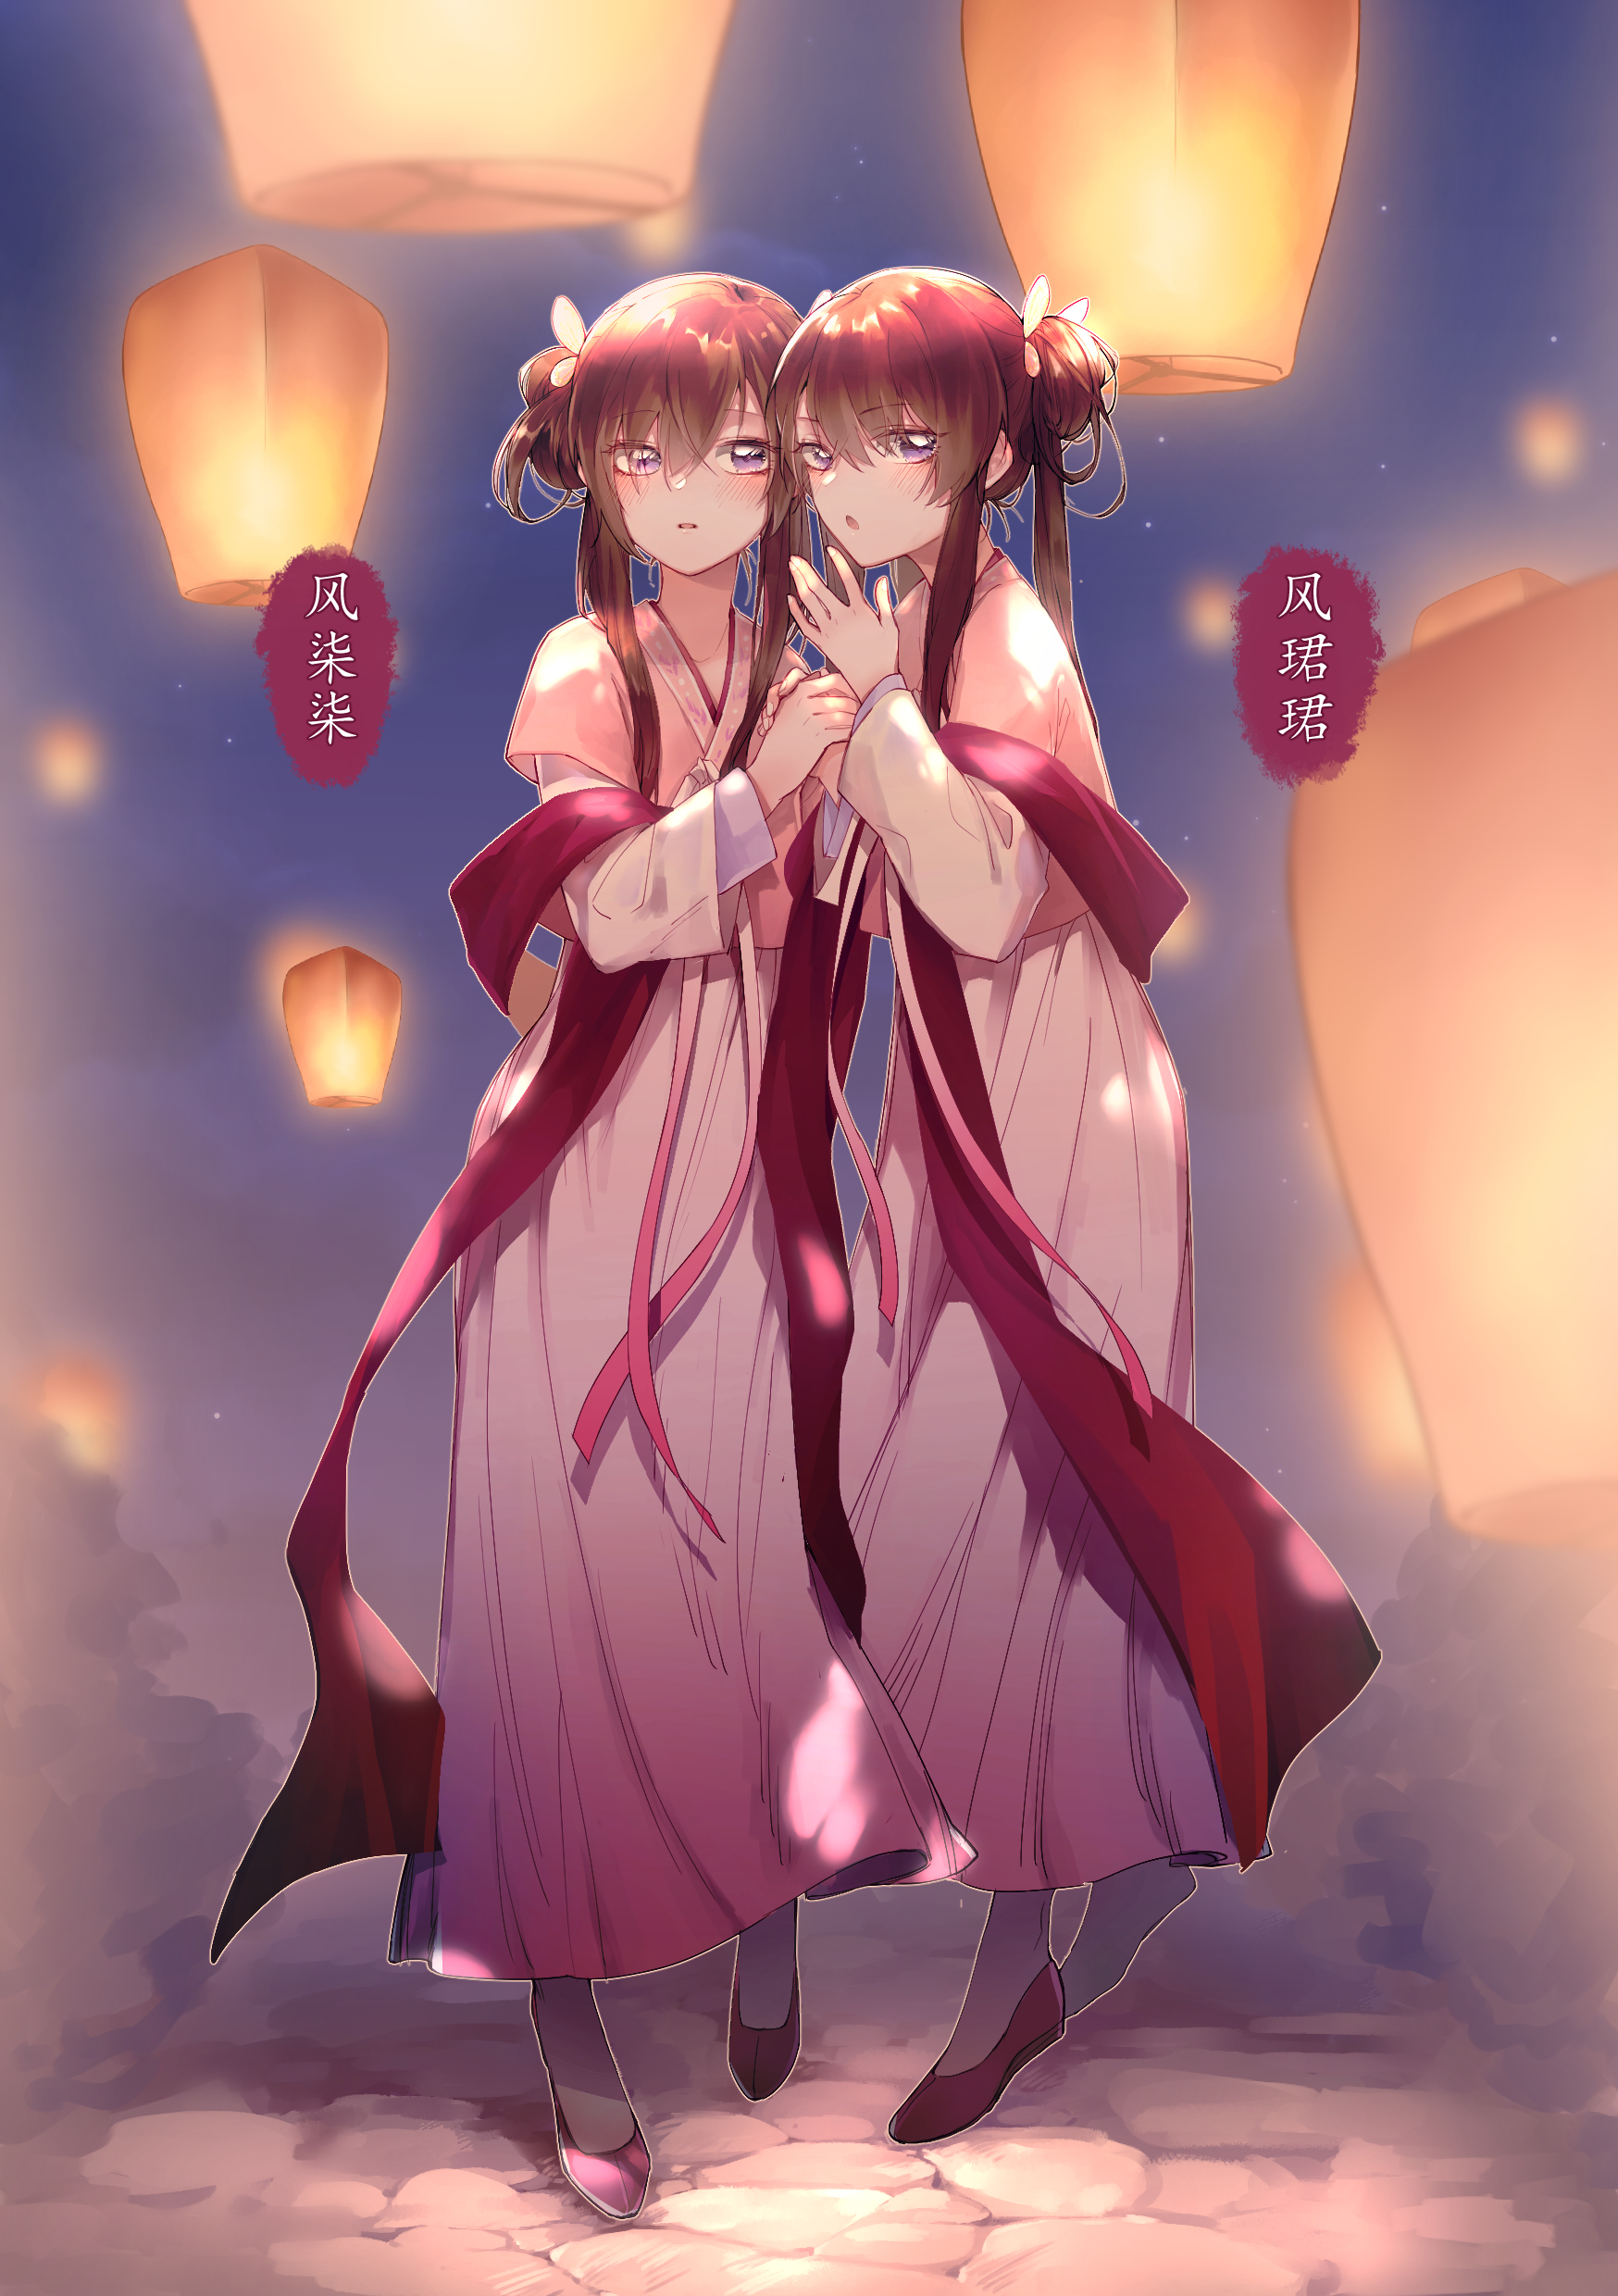 Anime 1748x2480 anime anime girls original characters twins artwork digital art fan art Chinese lantern